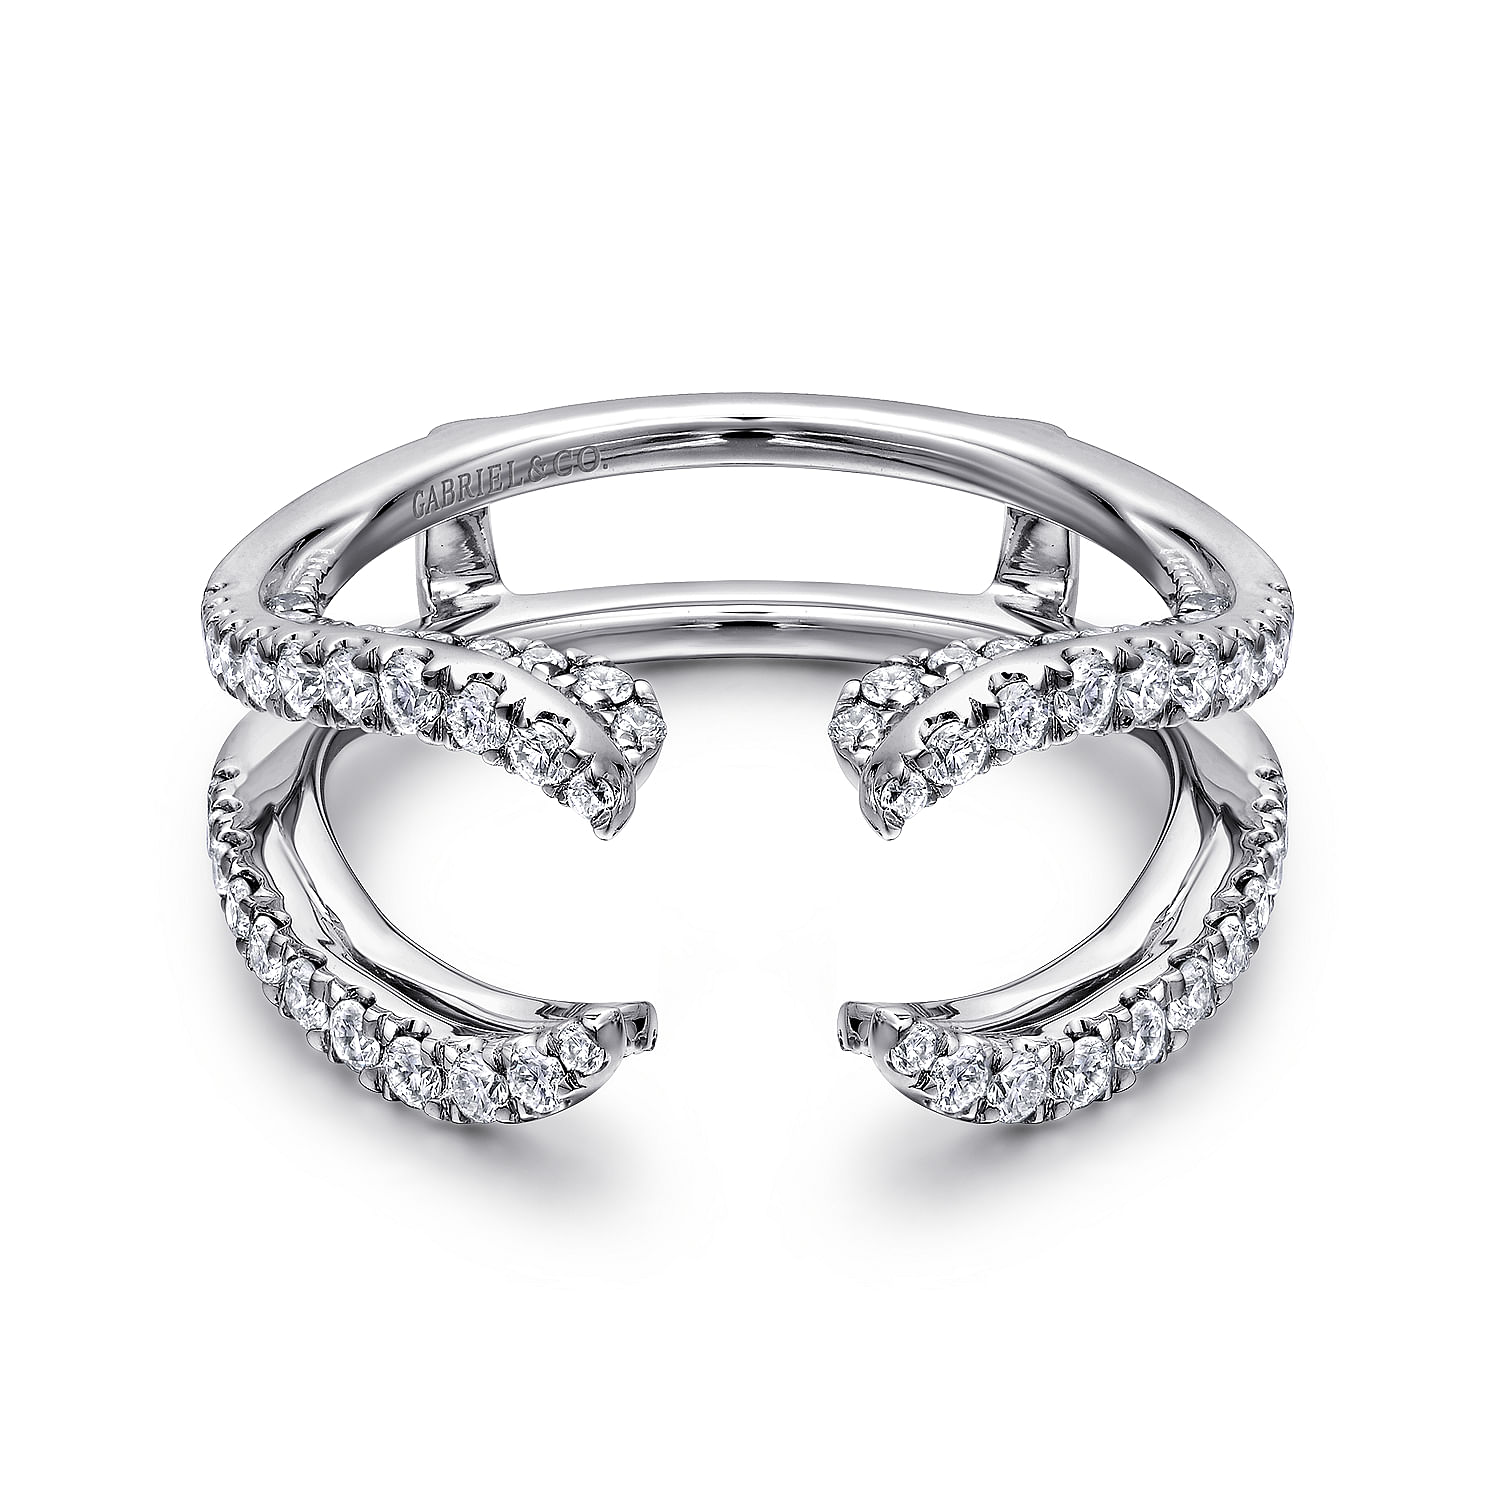 Platinum French Pavé Set Diamond Ring Enhancer